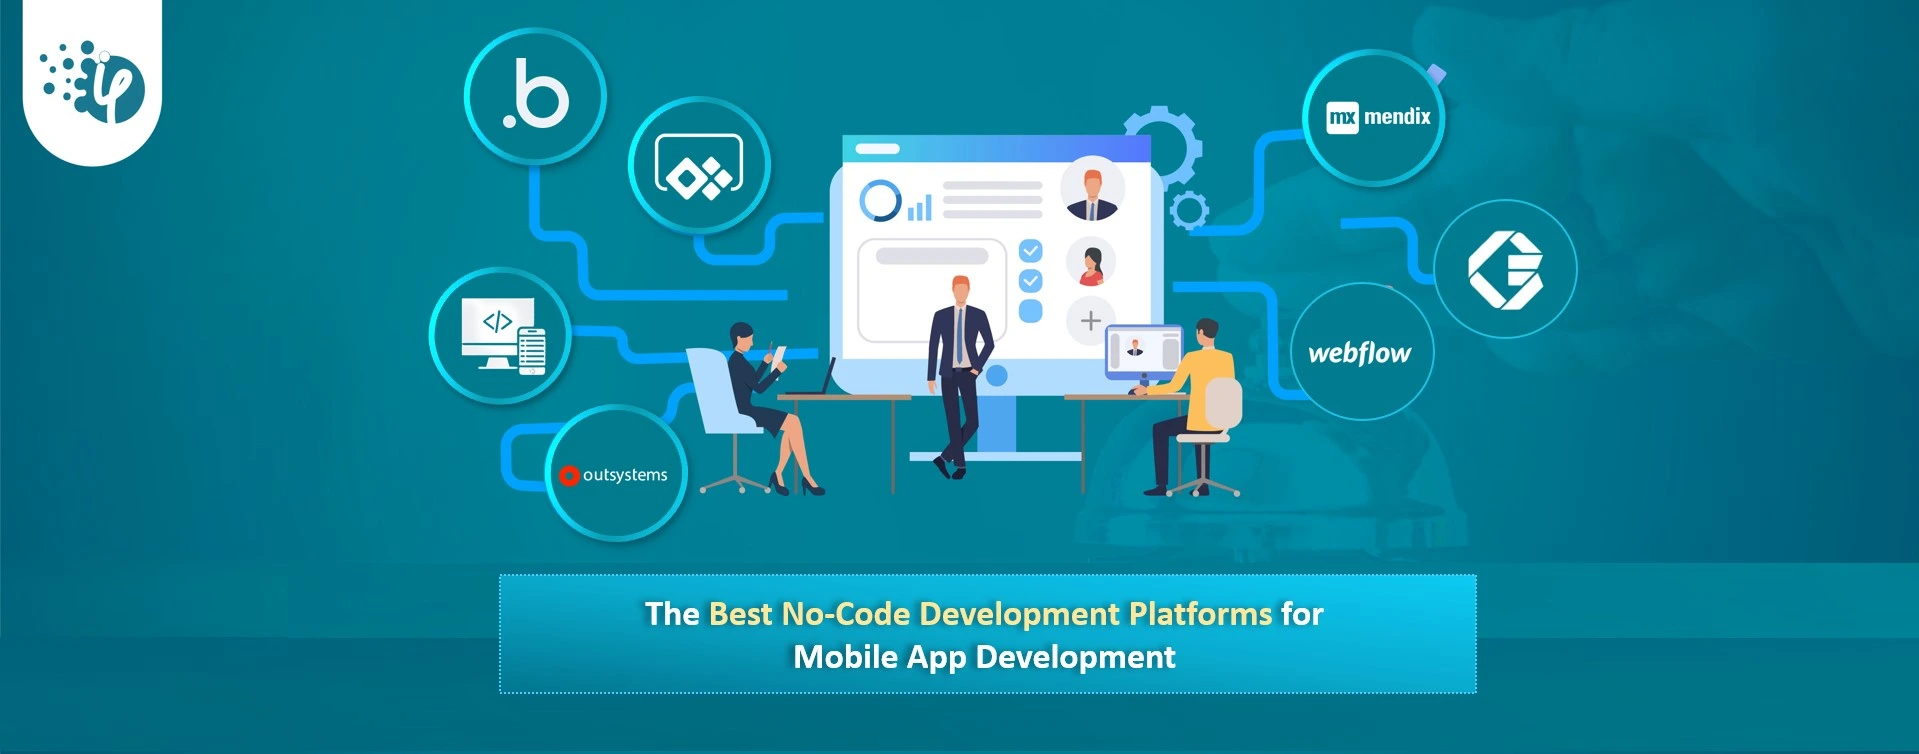 The Best No-Code Development Platforms for Mobile App Development